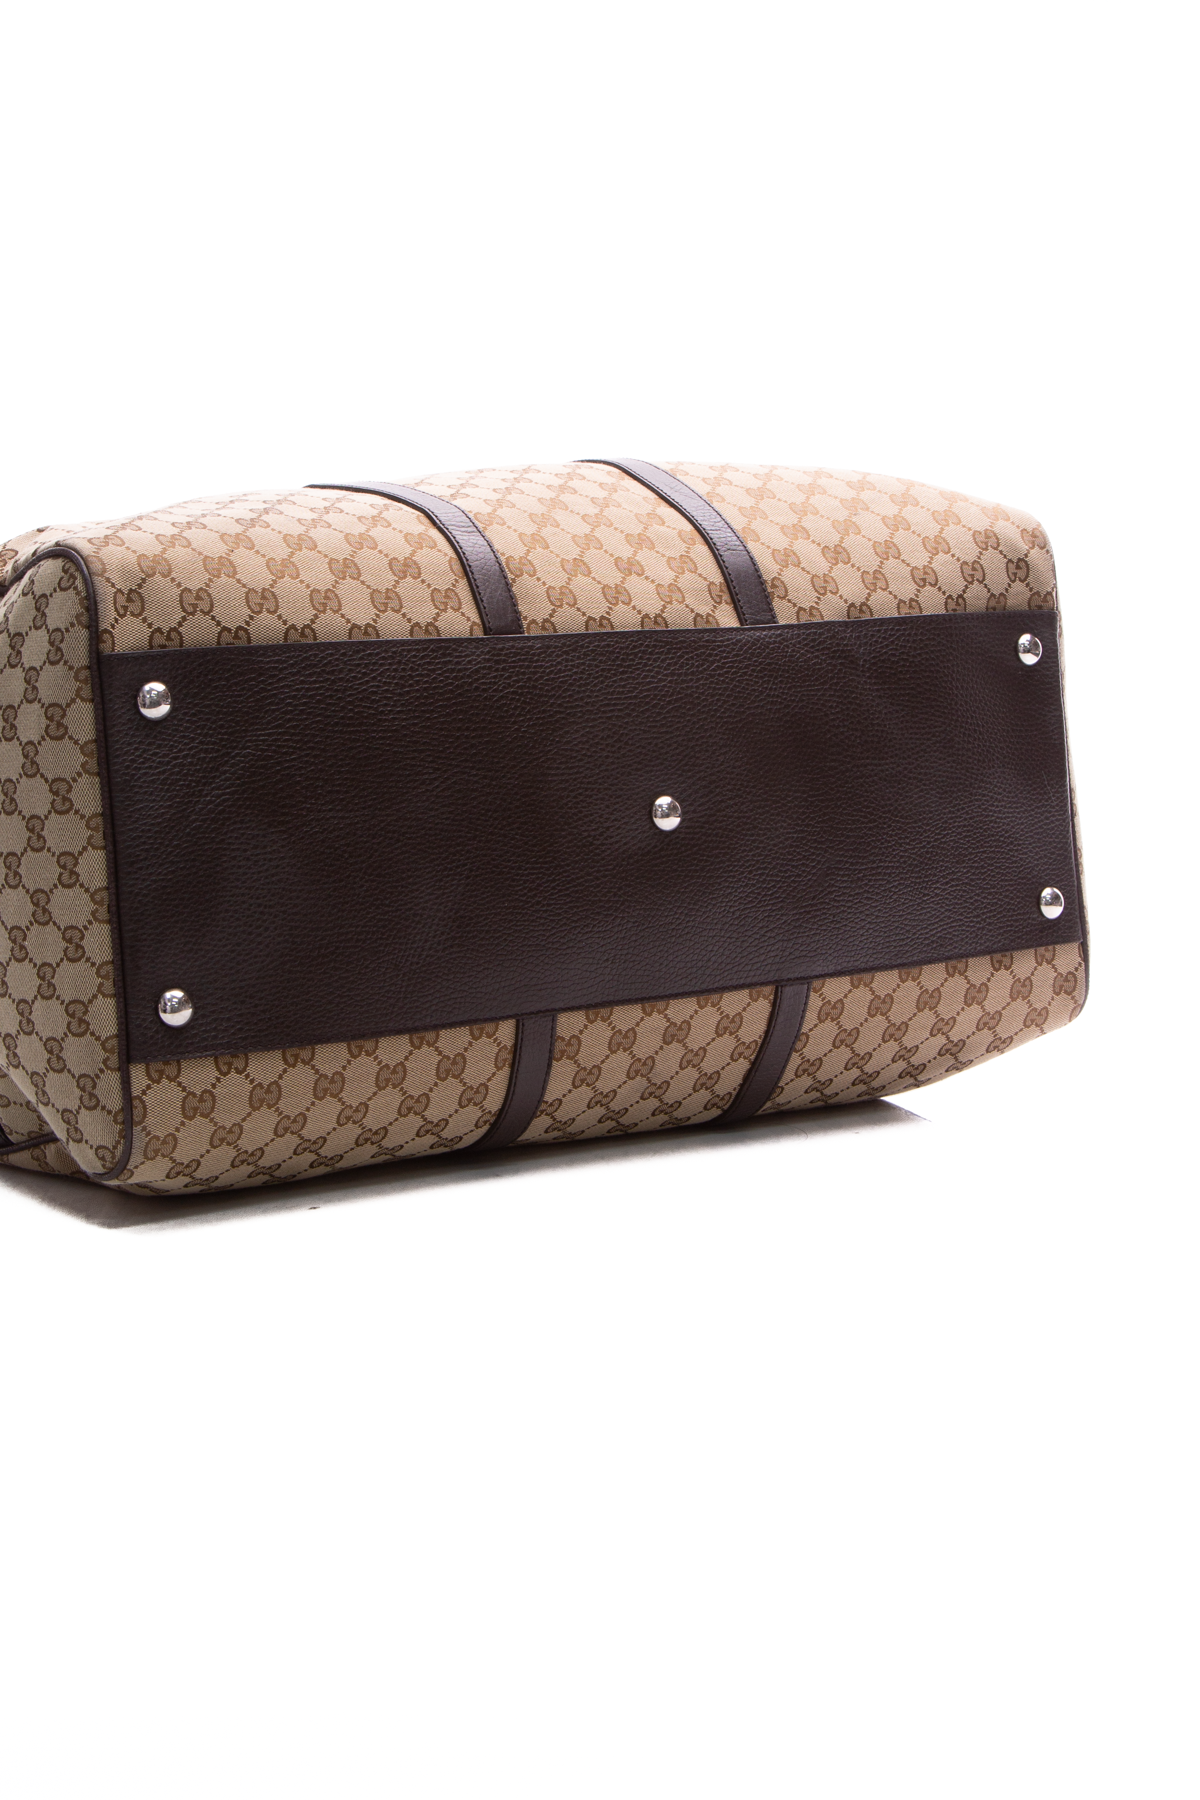 Gucci Savoy maxi duffle bag in beige and ebony Supreme | GUCCI® US